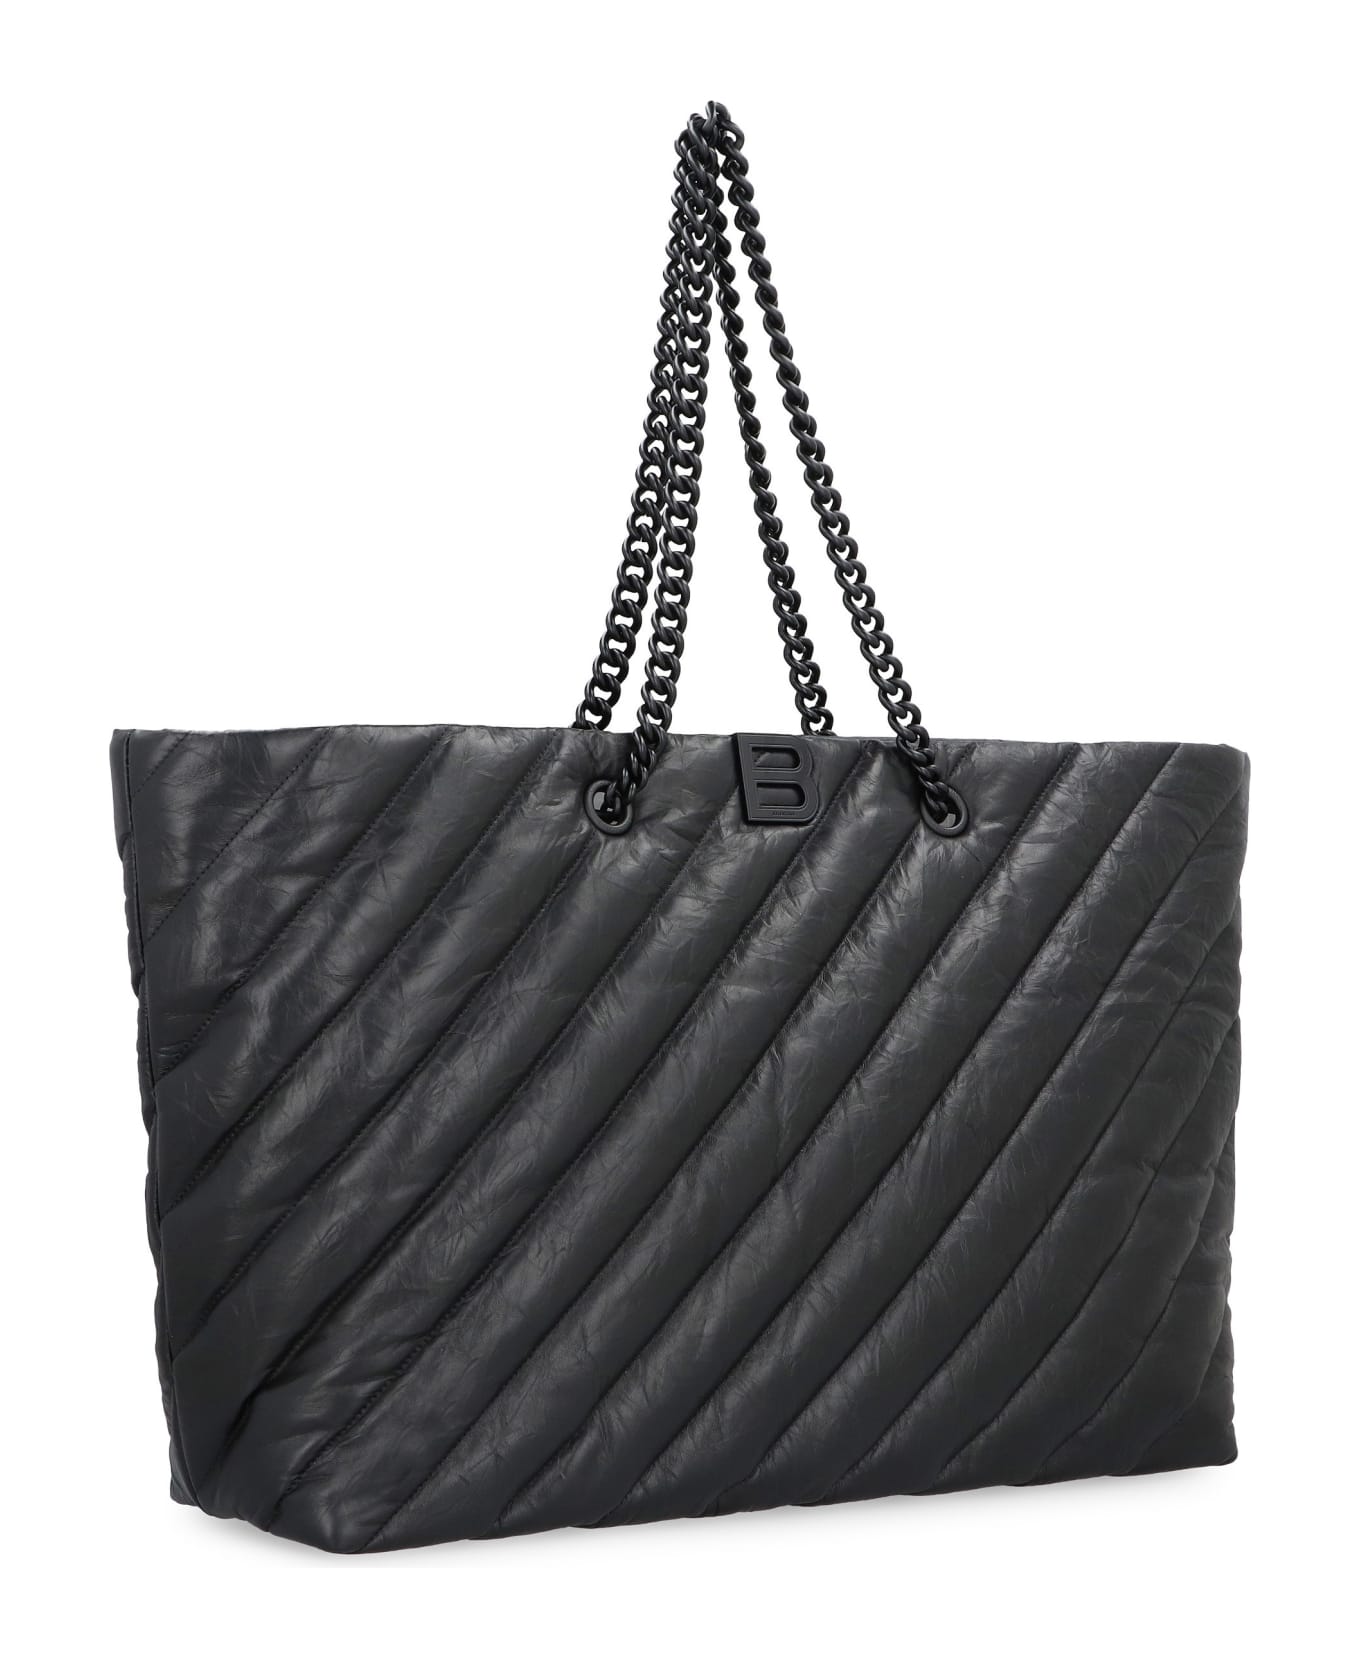 Balenciaga Carry All Crush Leather Tote - black